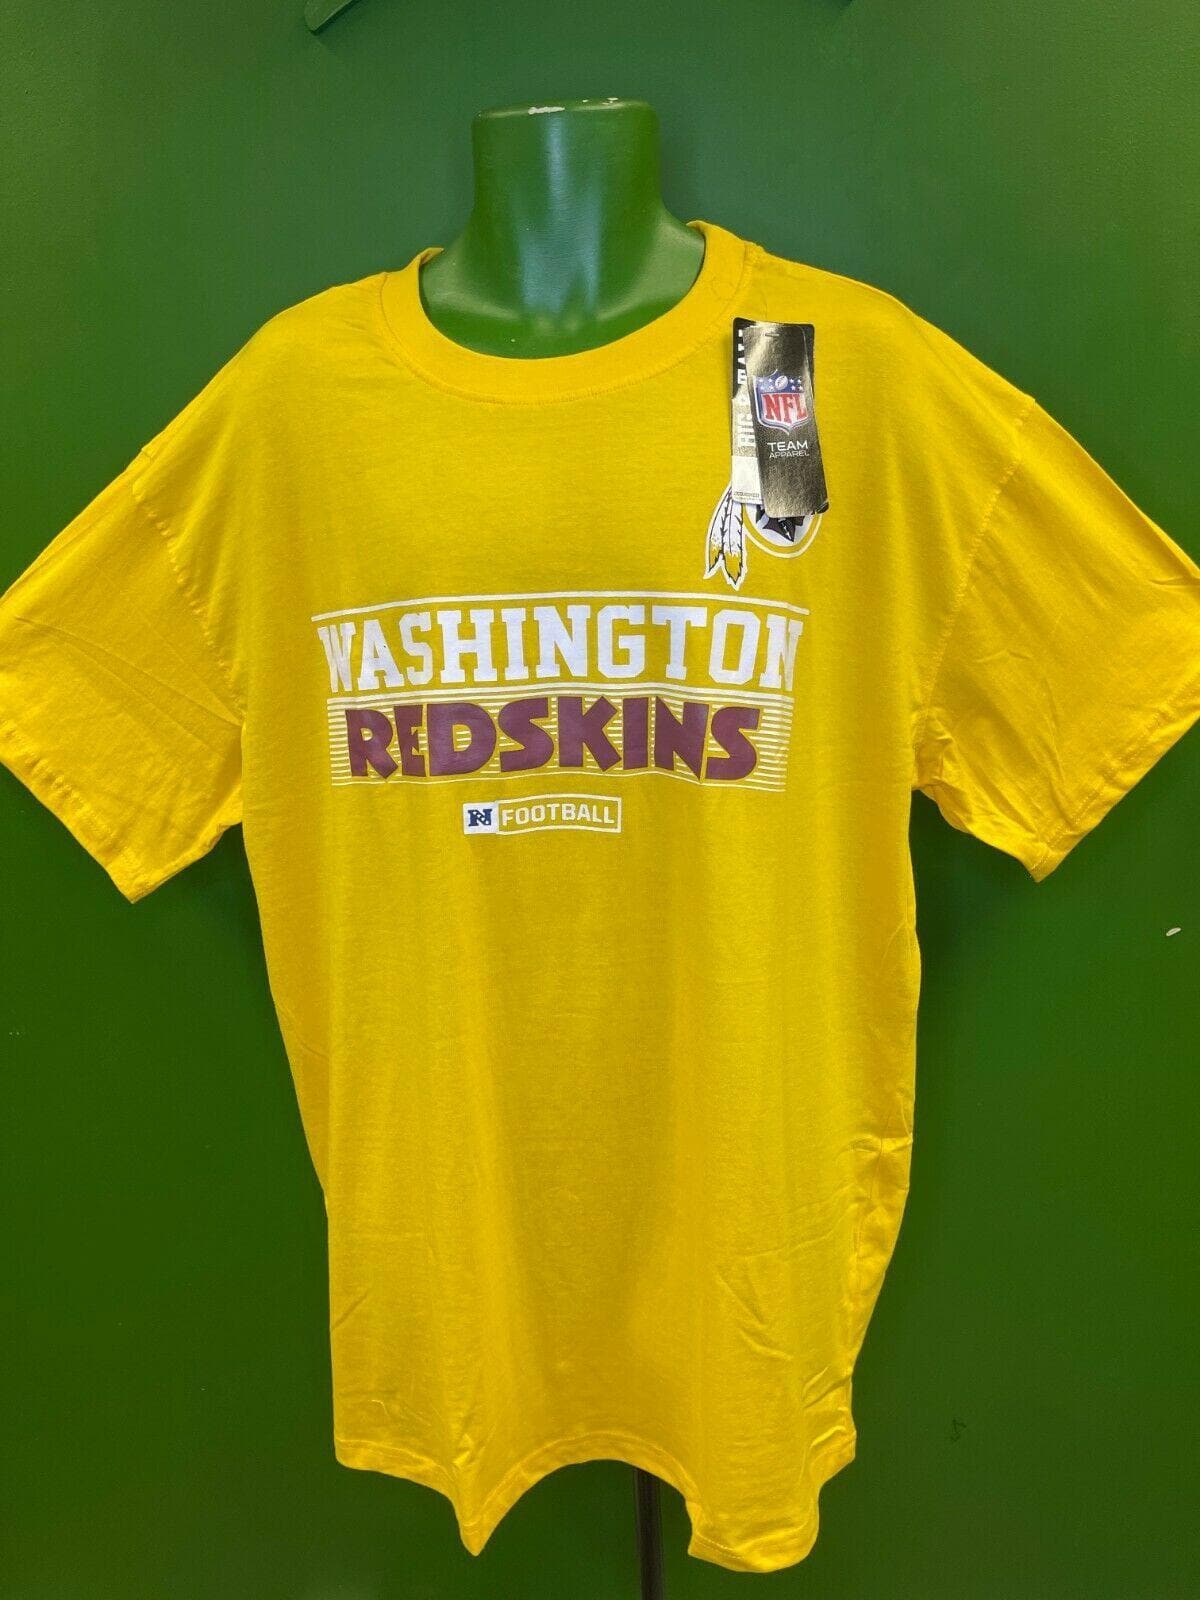 NFL Washington Commanders (Redskins) T-Shirt Men's 2X-Large NWT